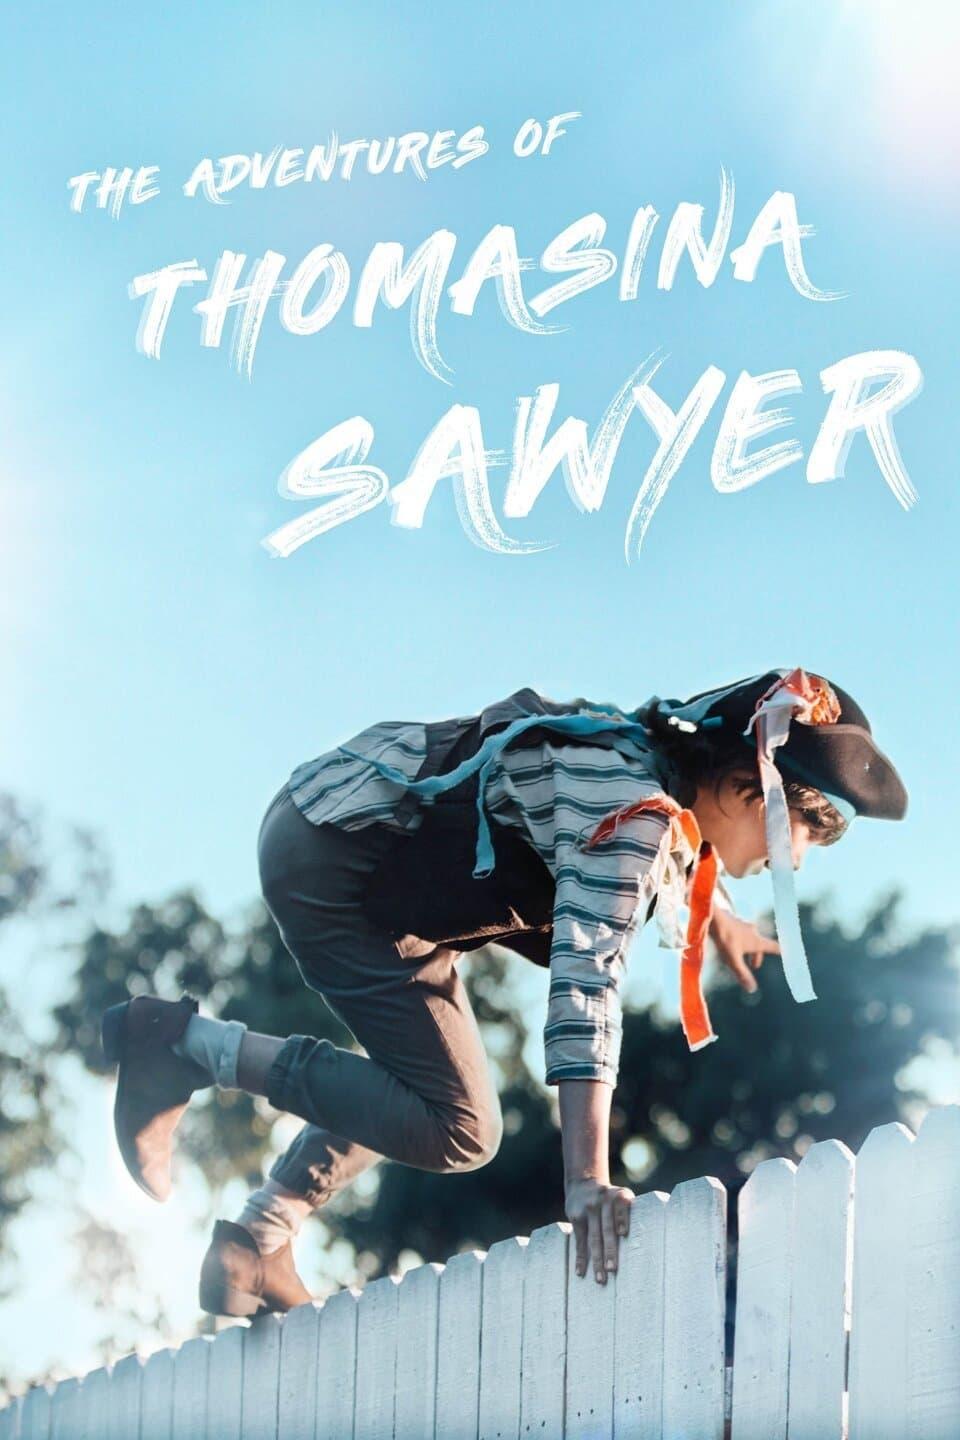 The Adventures of Thomasina Sawyer poster